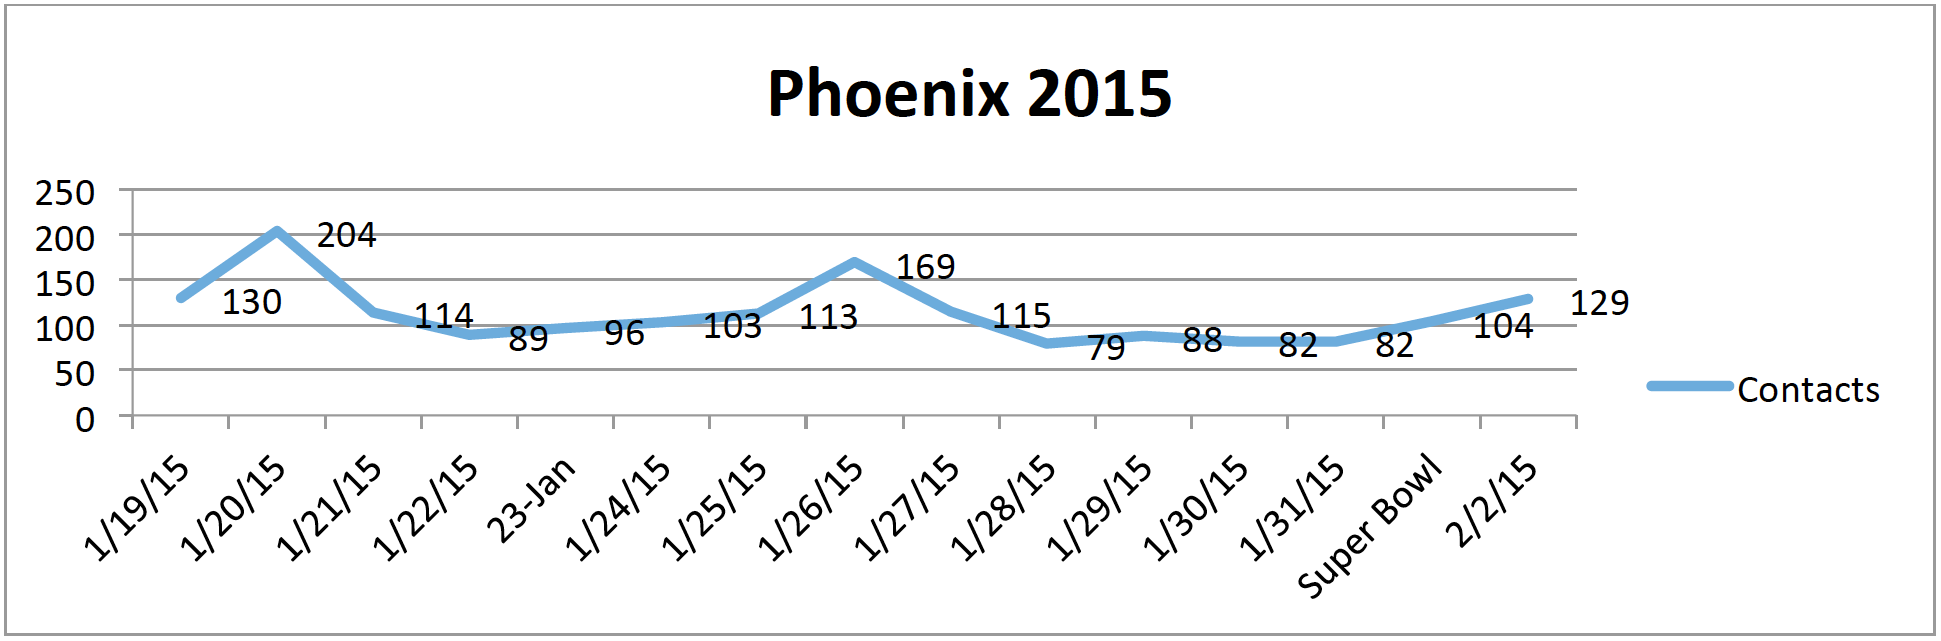 demand_phoenix_2015